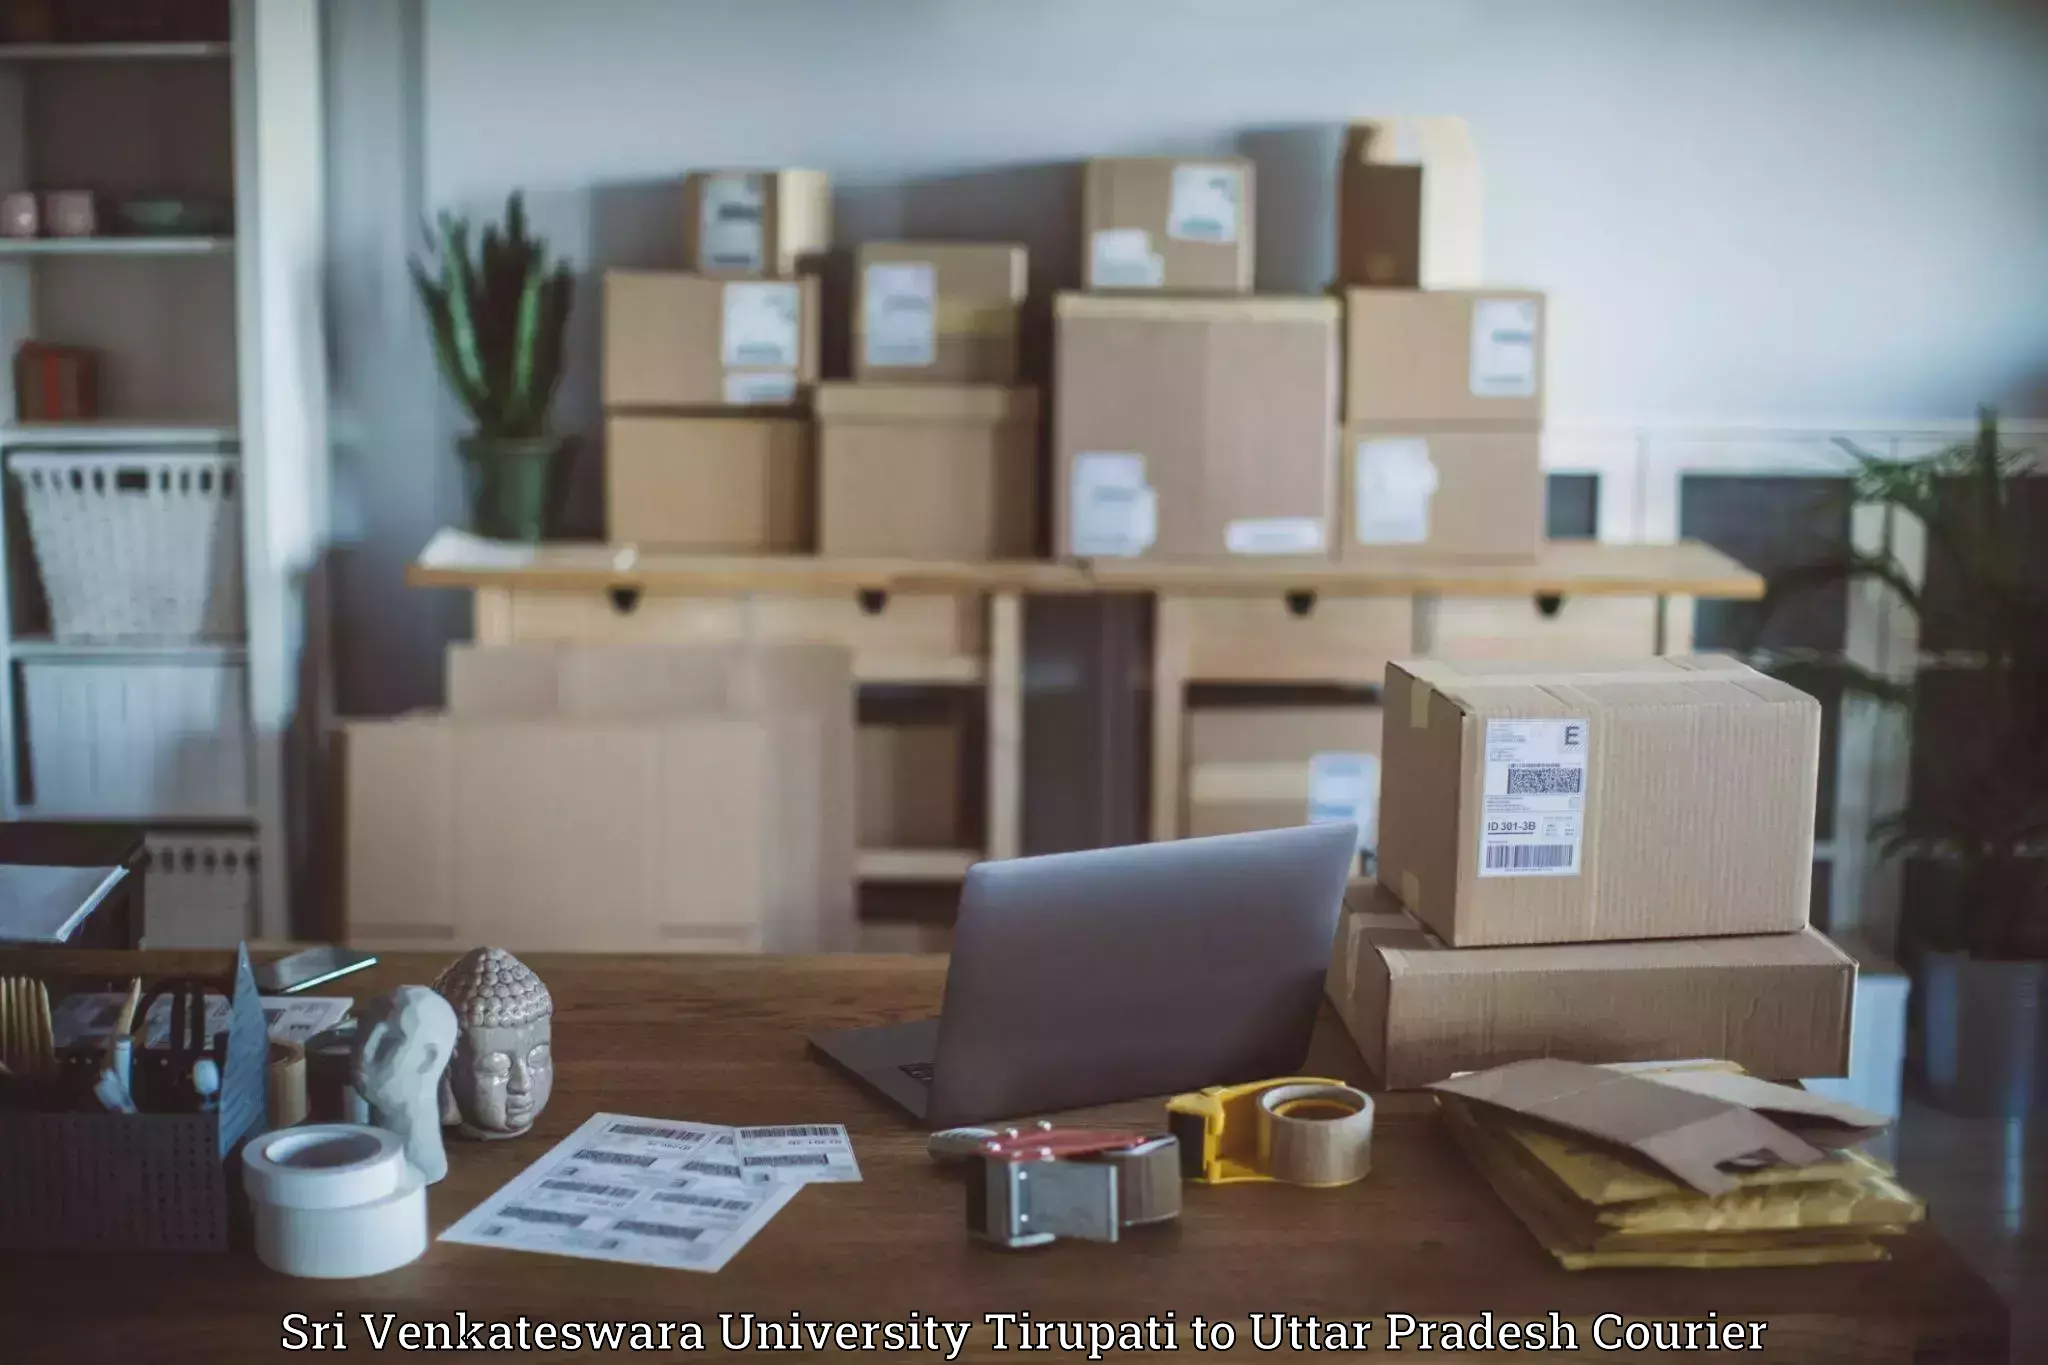 On-call courier service Sri Venkateswara University Tirupati to Aligarh Muslim University